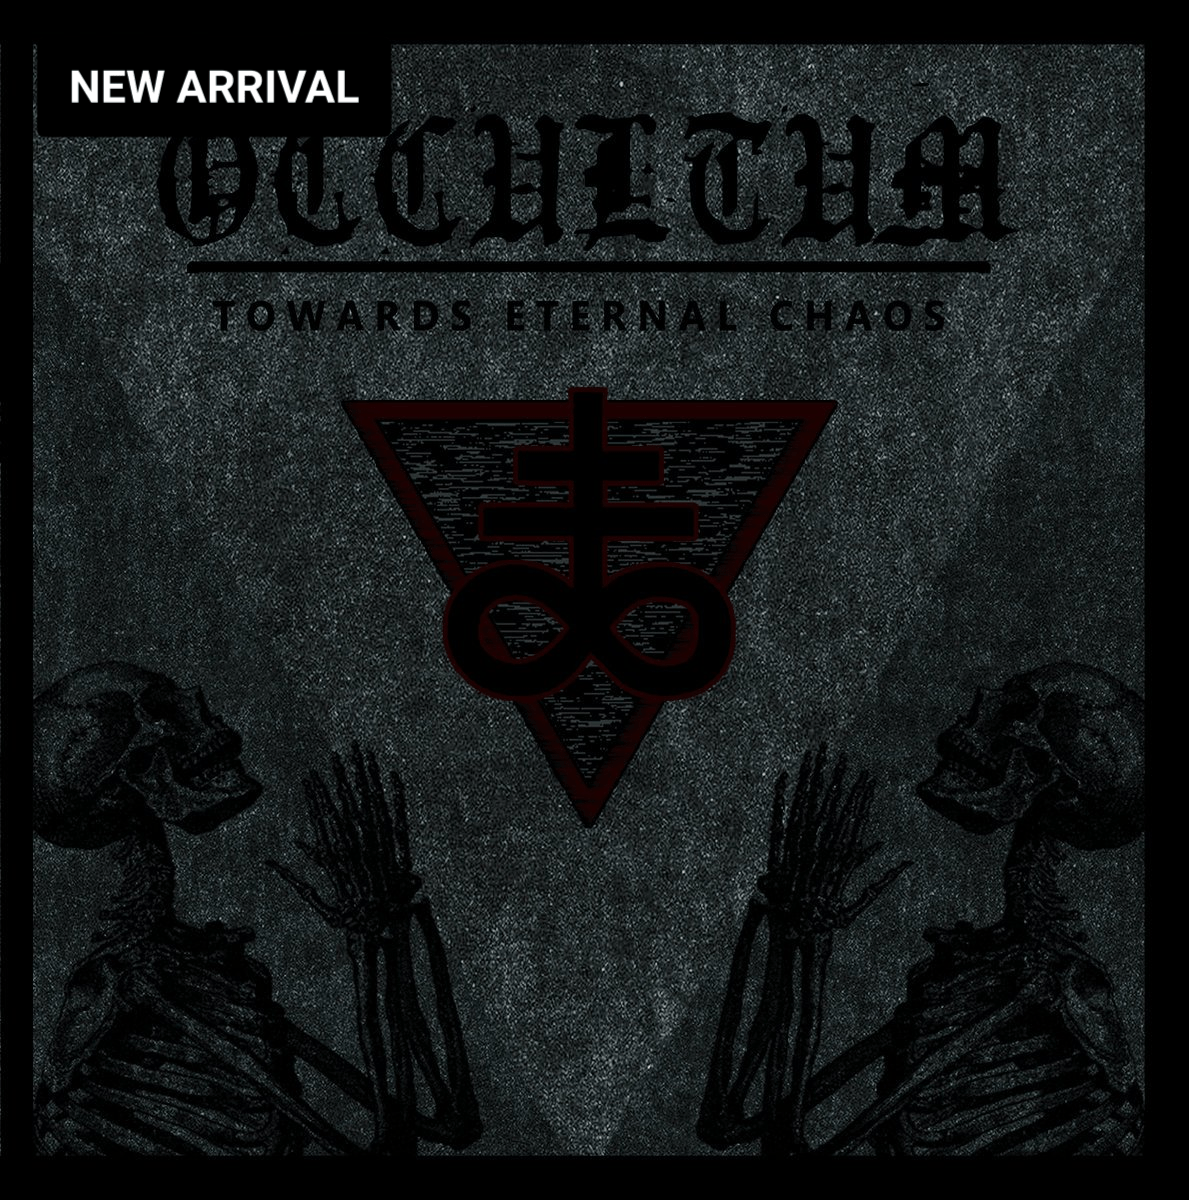 Occultum (Pol)  "Towards Eternal Chaos" - CDs